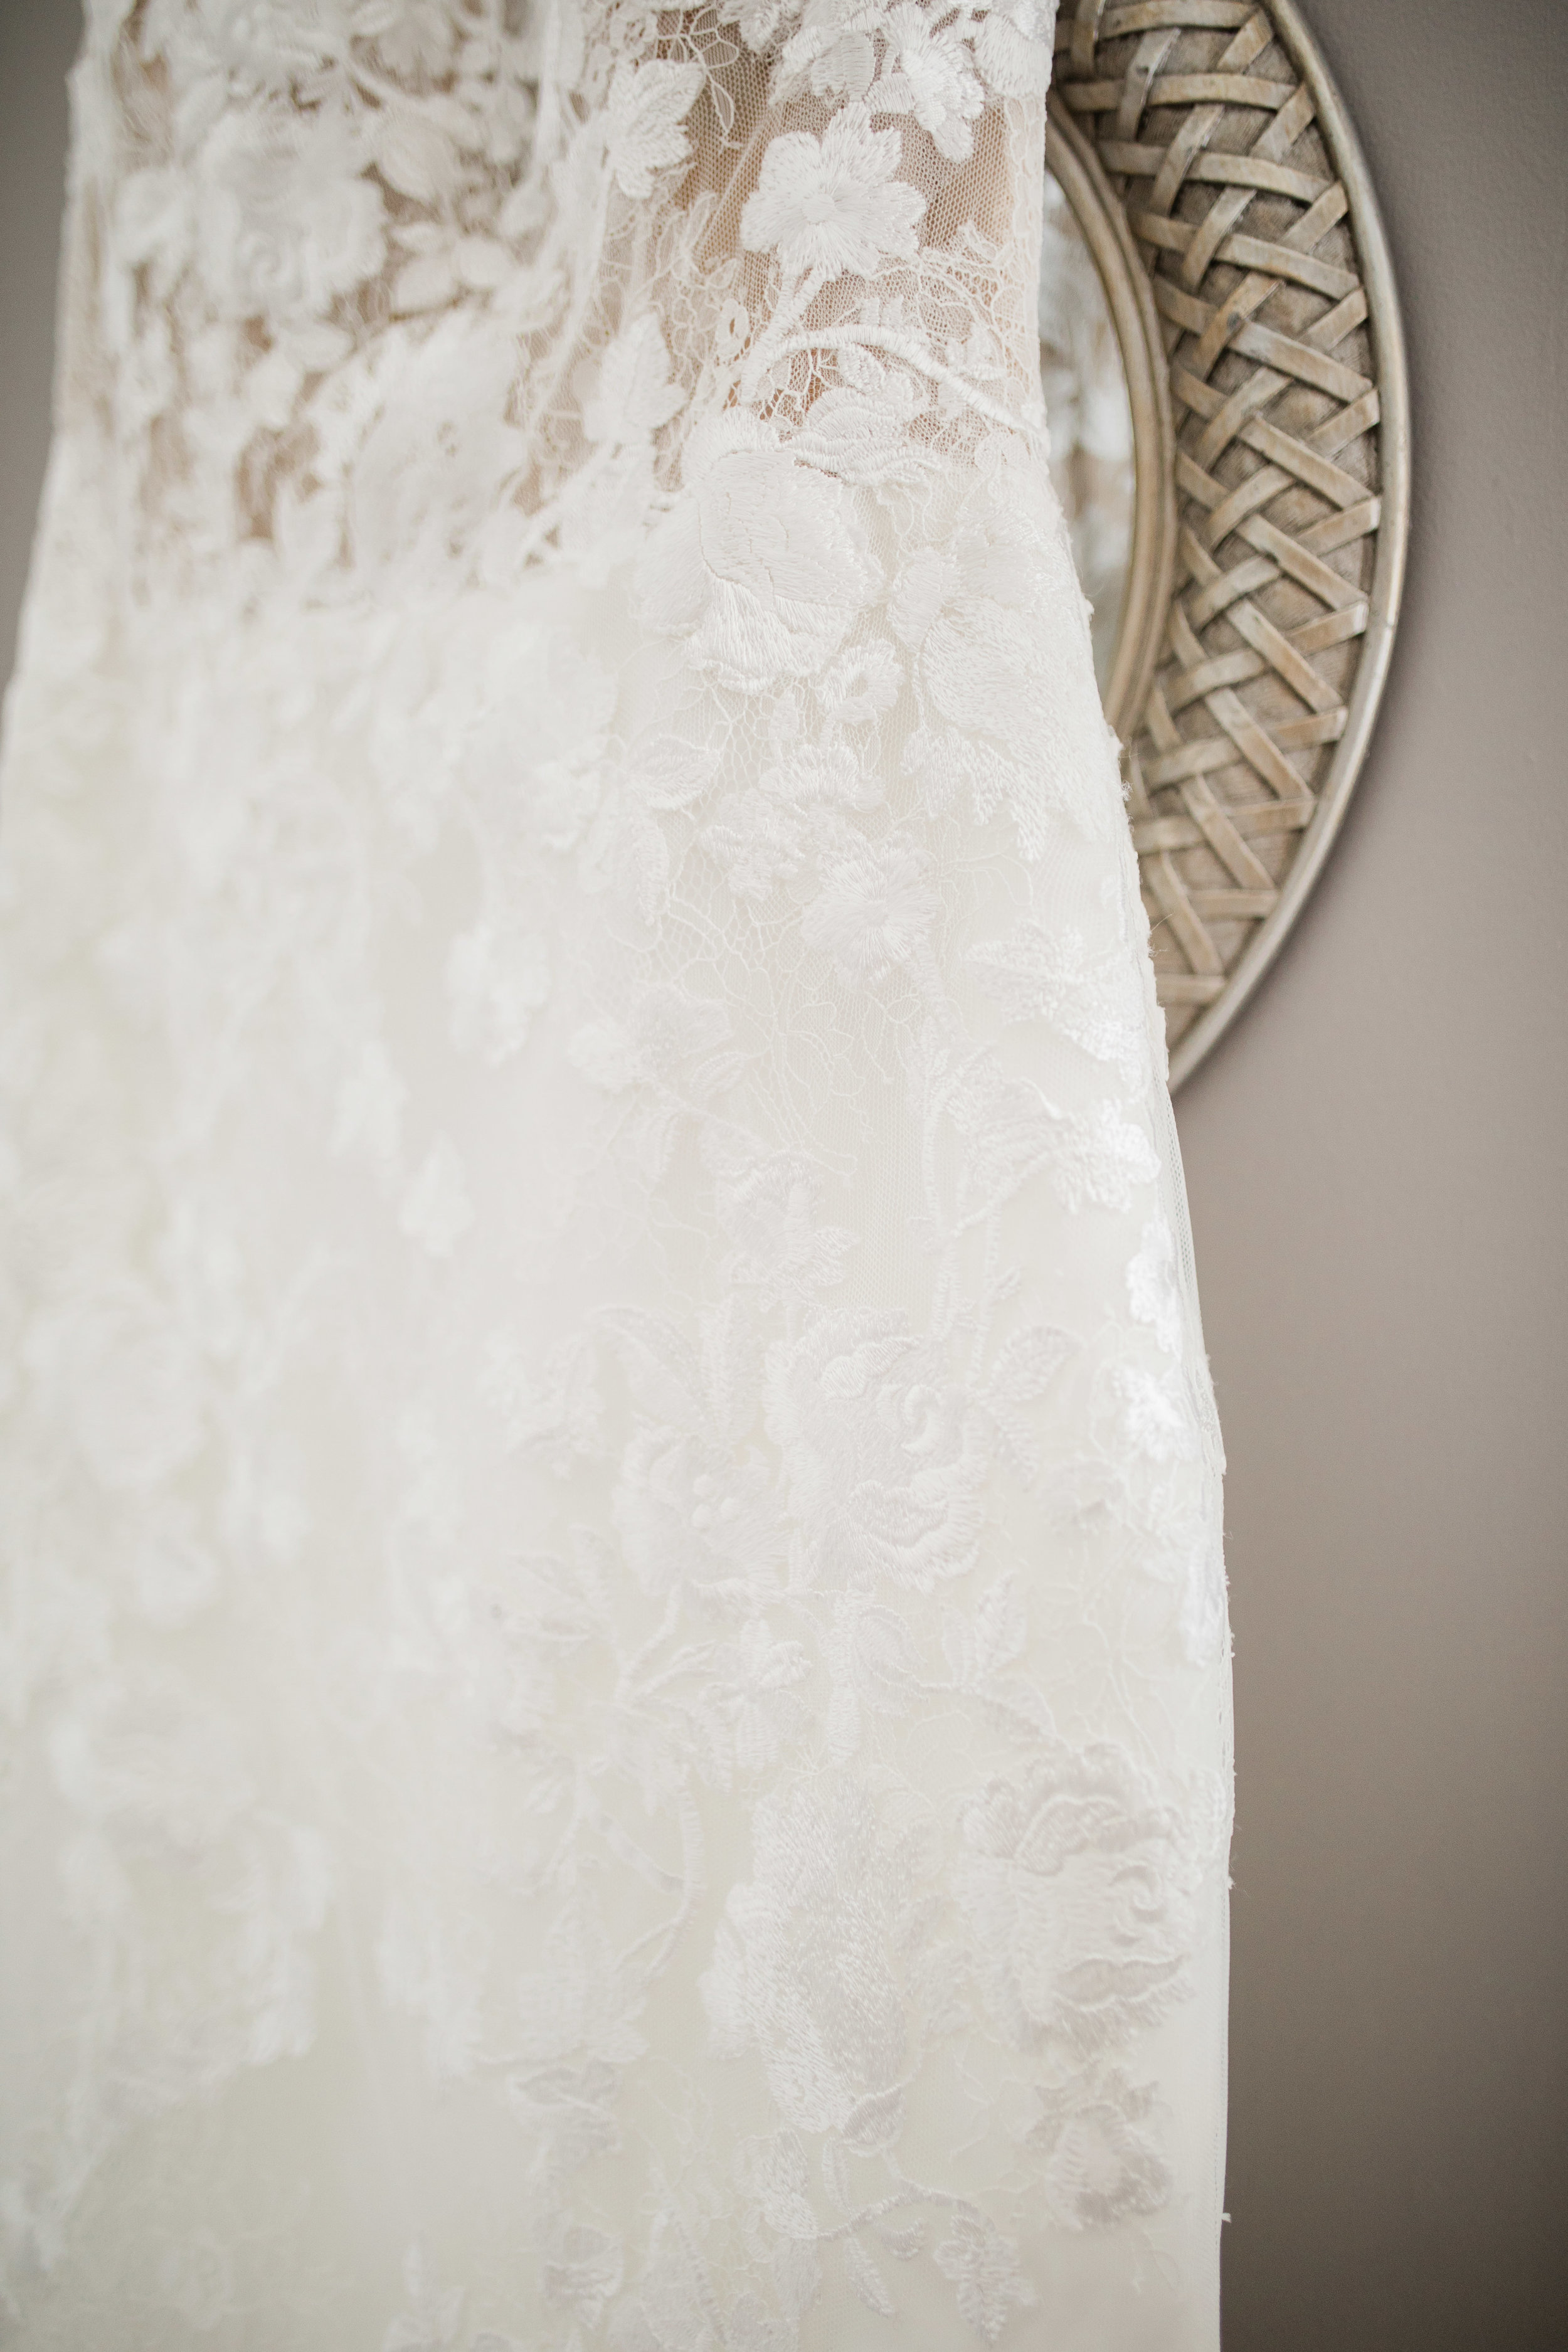 Pronovias Gown Details at Everthine bridal 